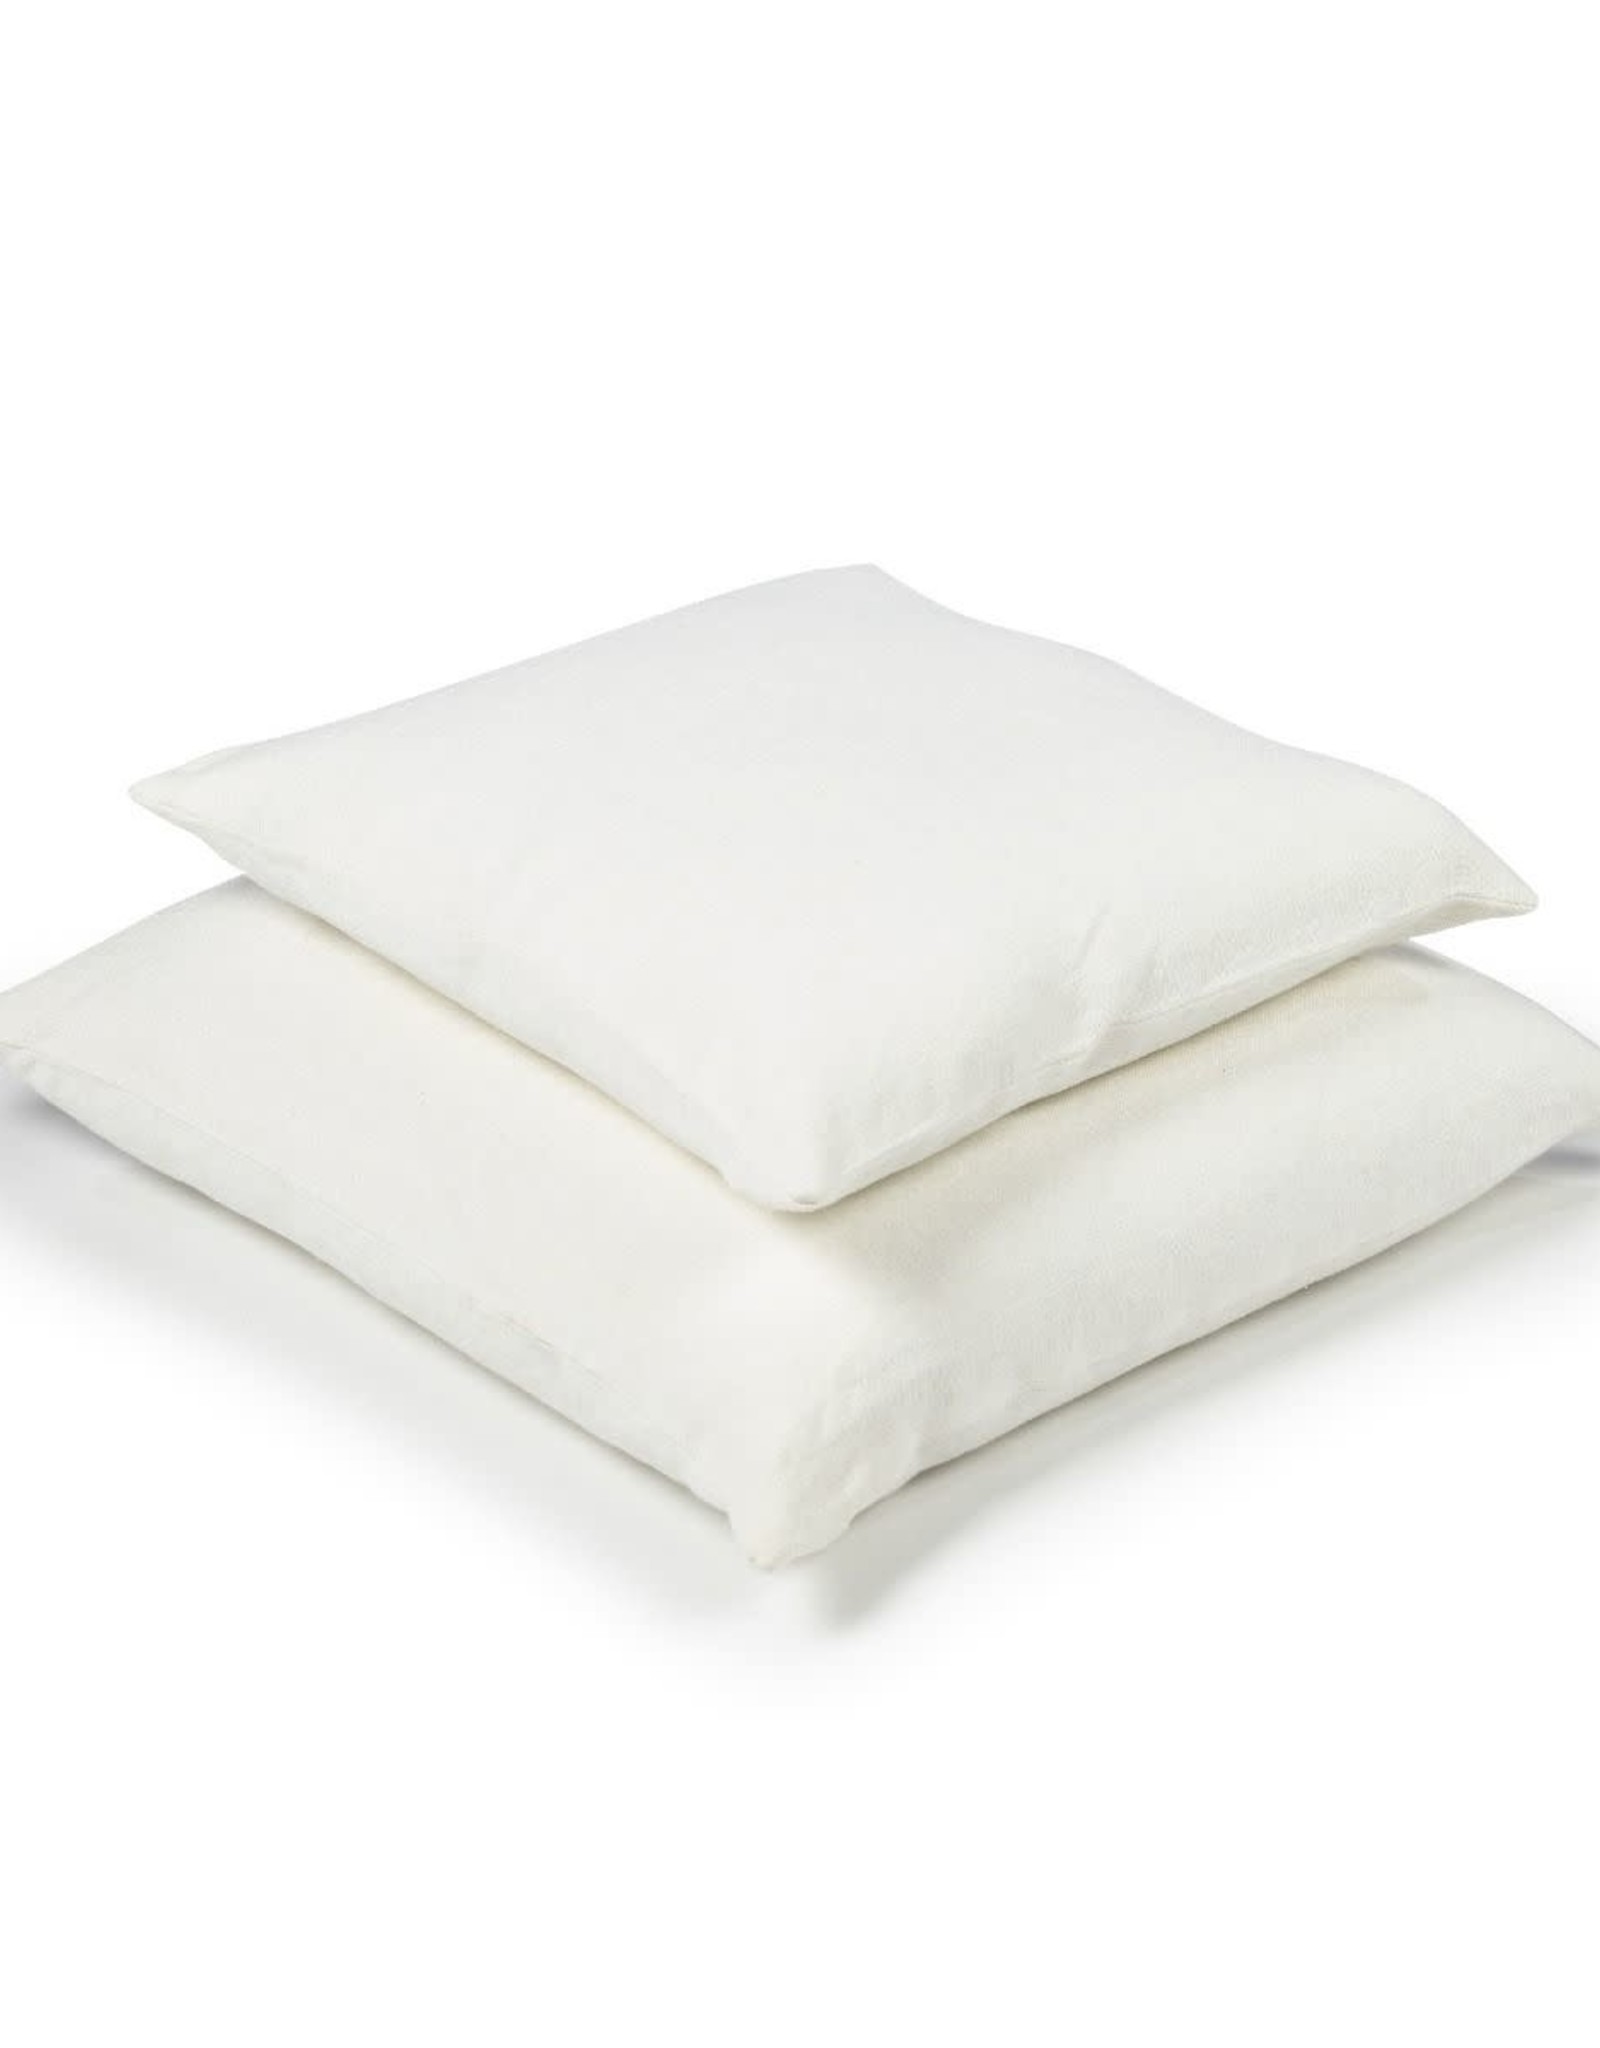 LIBECO LAGAE Pillow Hudson Oyster White 20x20